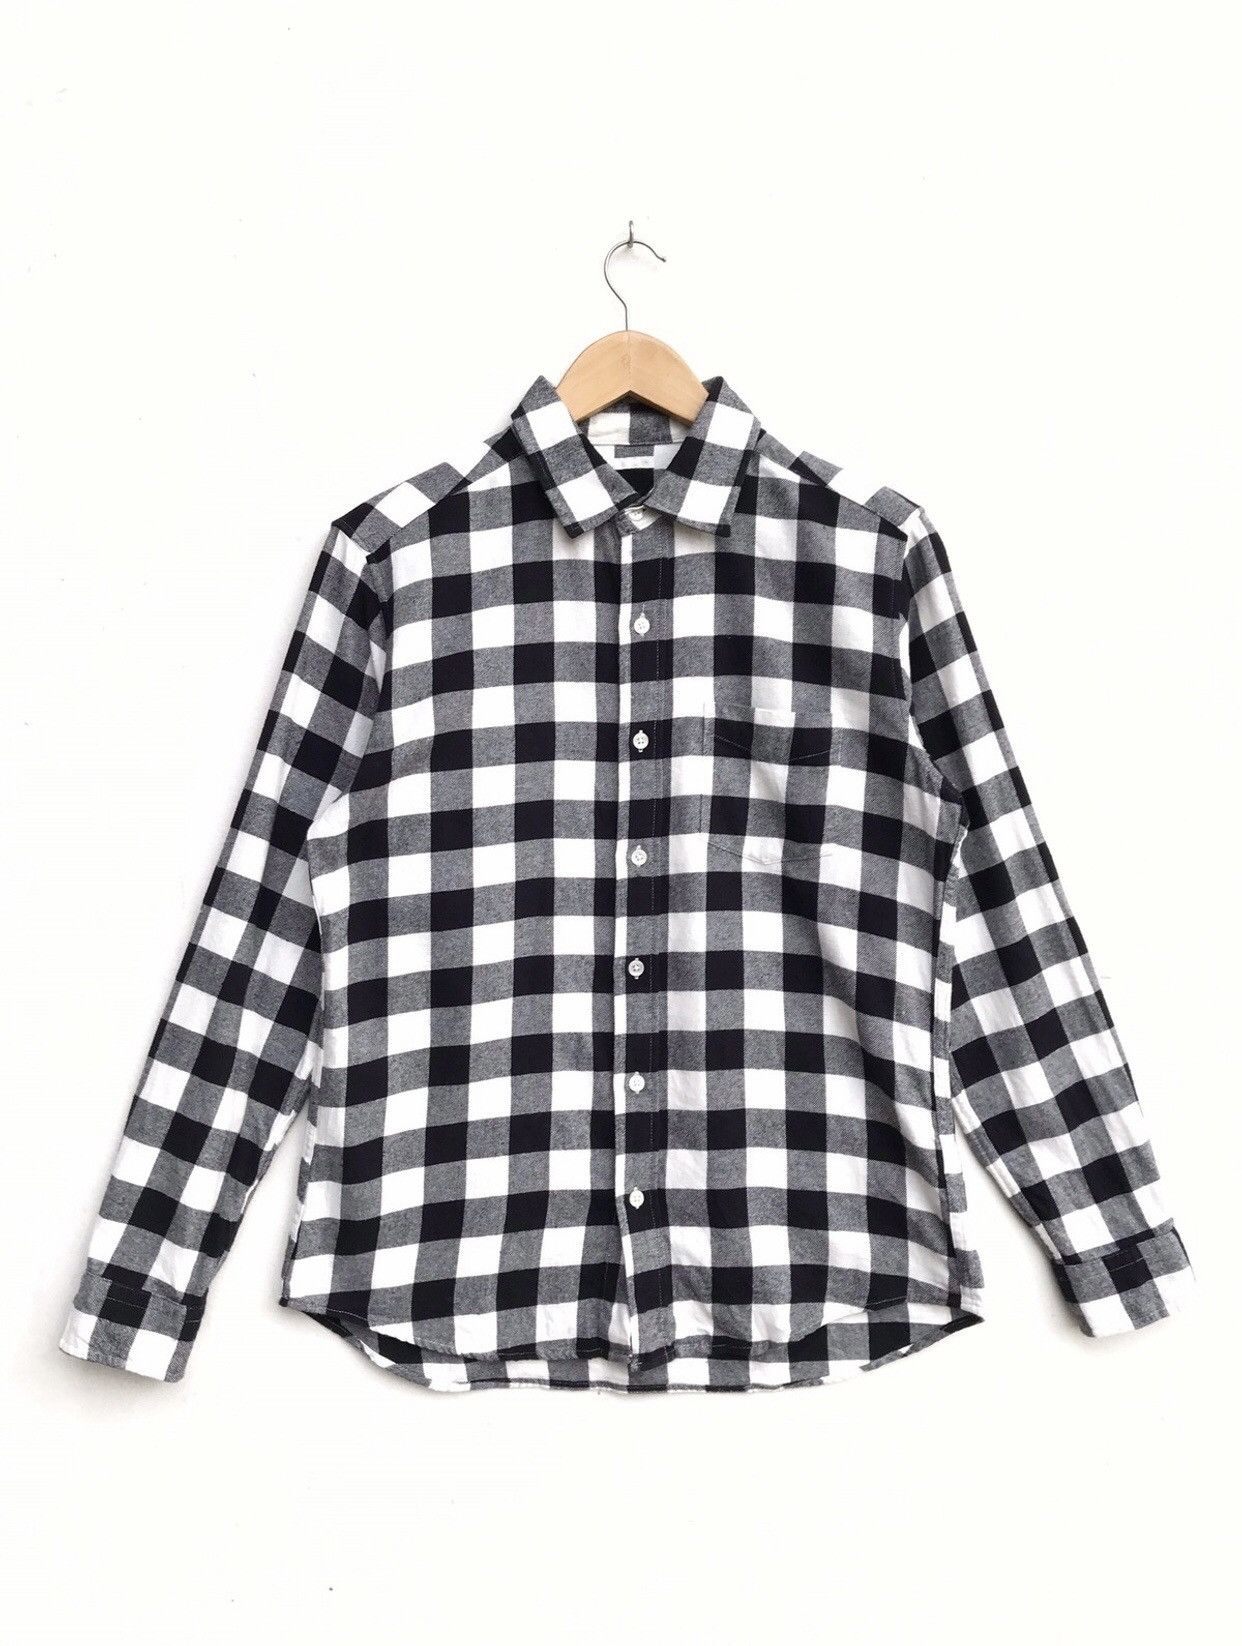 Japanese Brand Japanese Brand GU Checkered Flannel Shirt | Grailed